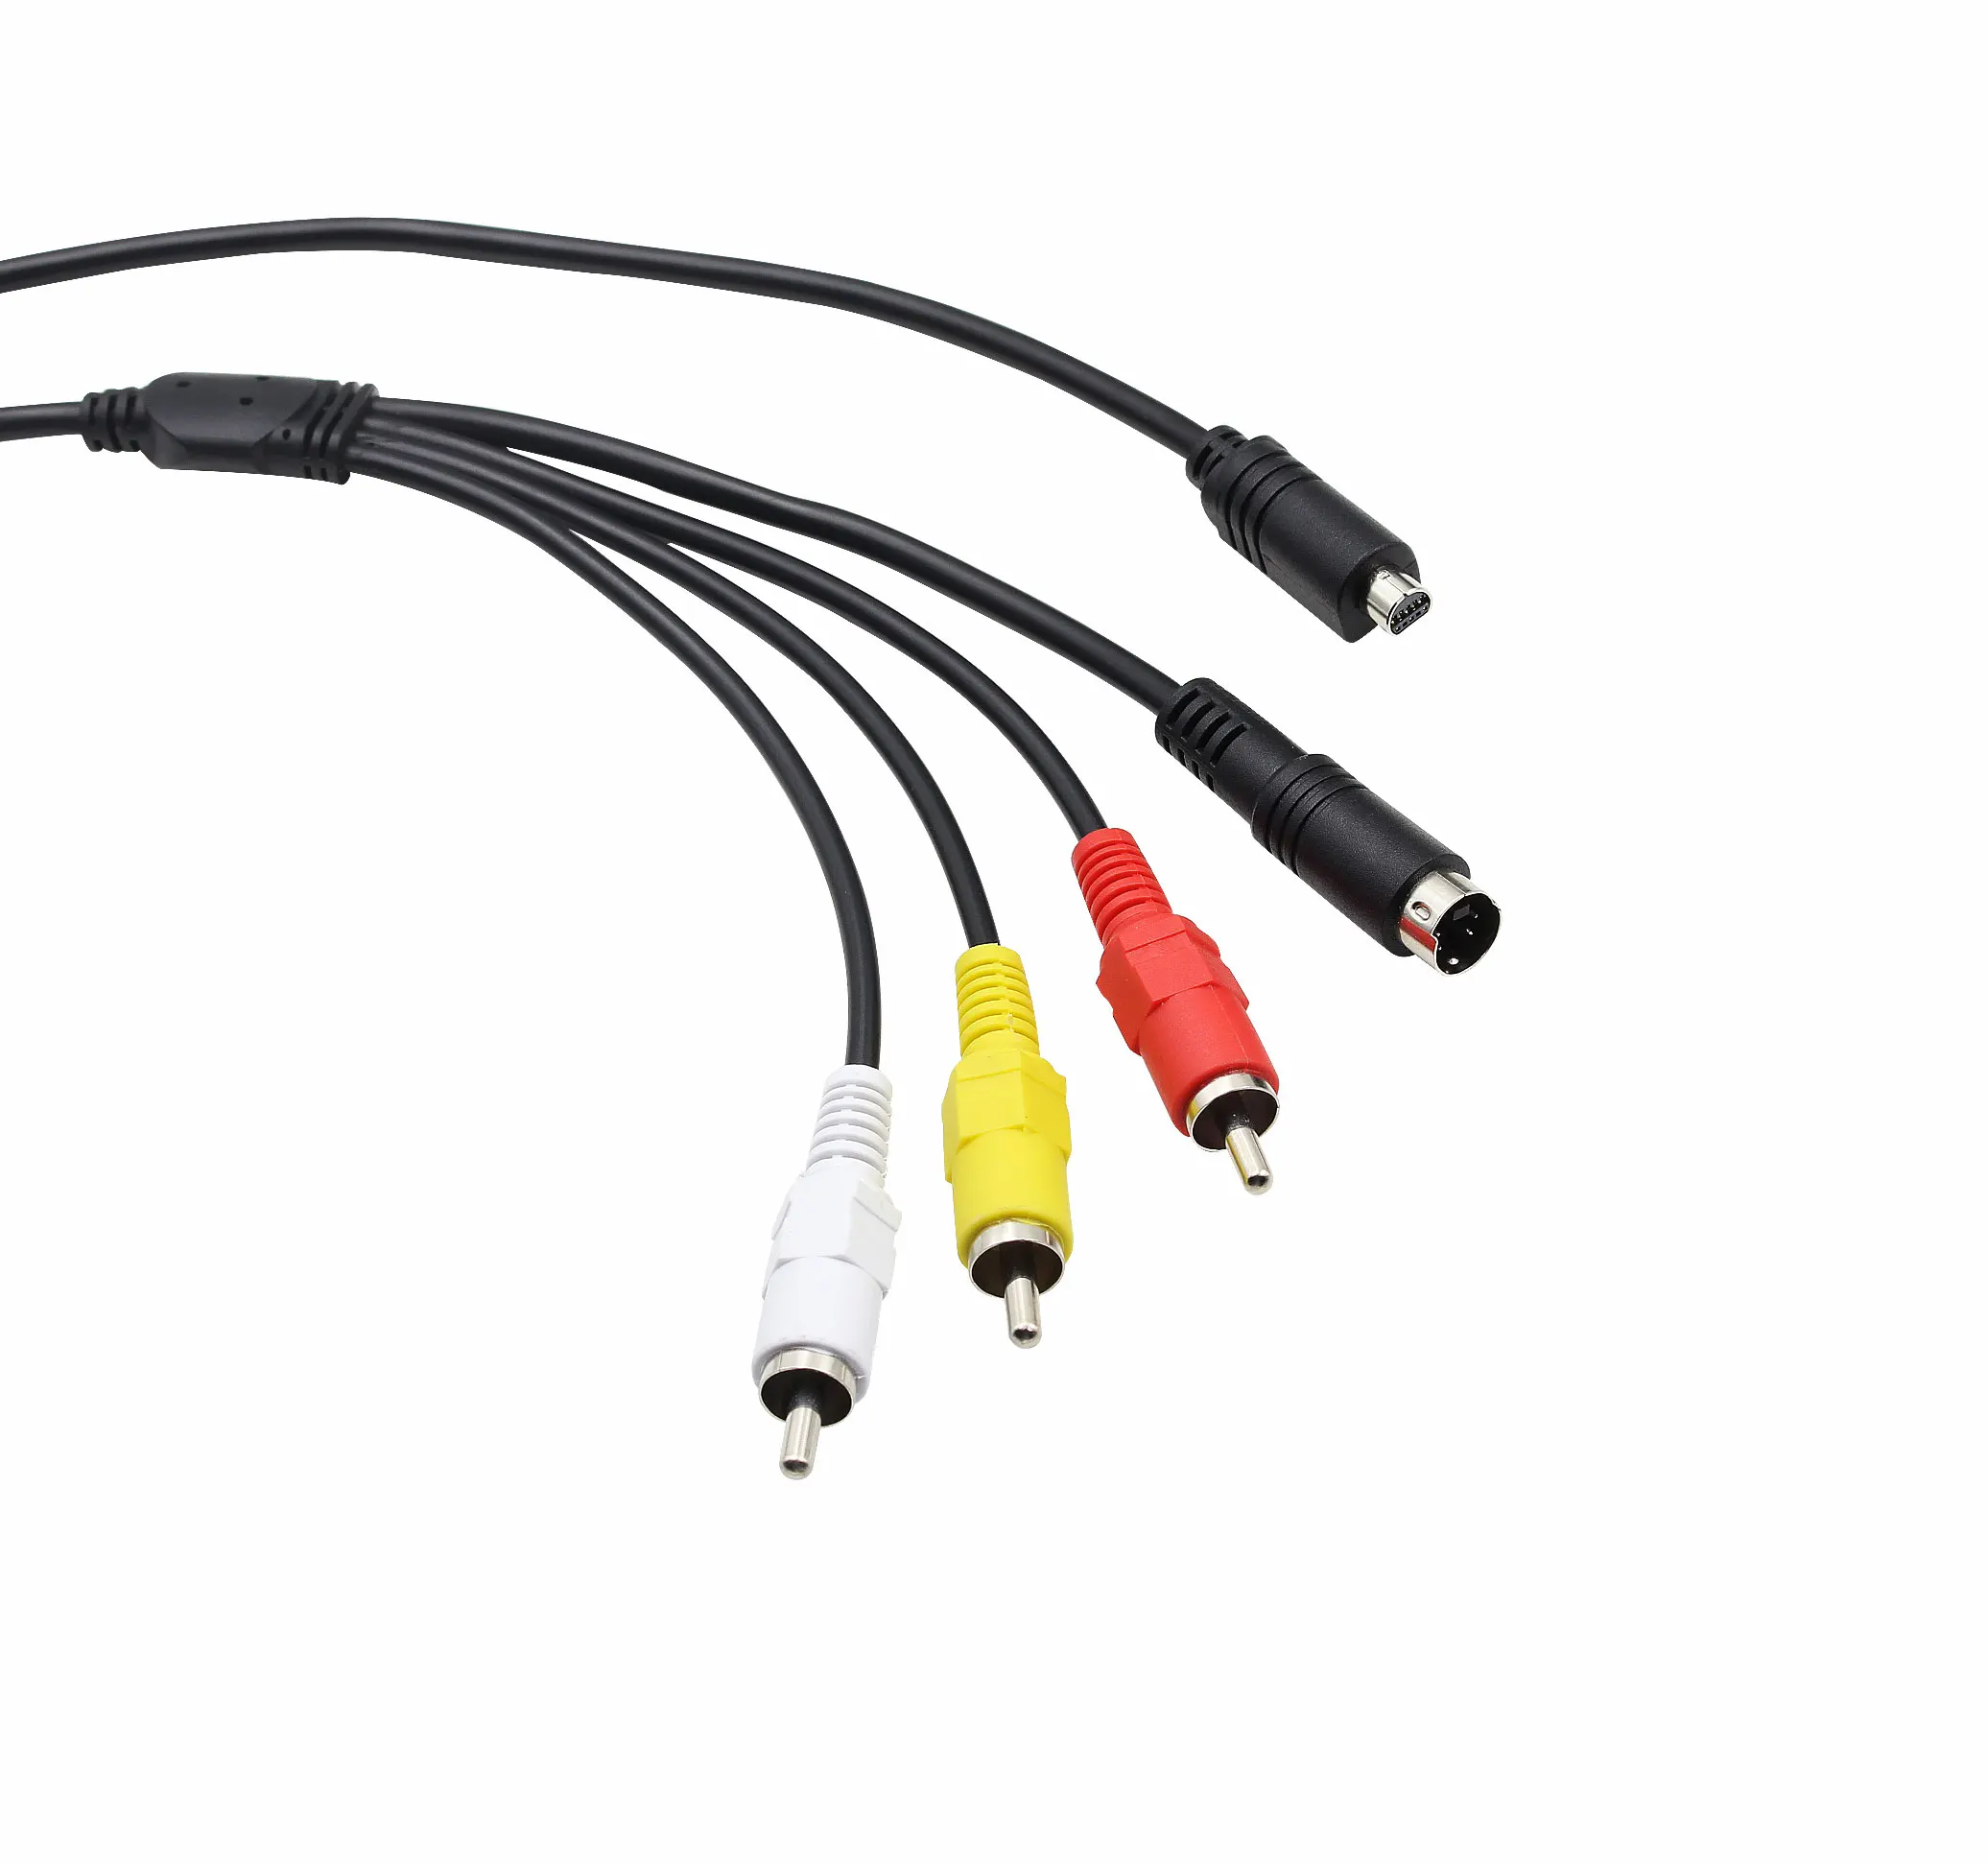 AV A/V TV Video Cable Cord Lead For Sony Camcorder Handycam DCR-PC330 DCR-PC1000 